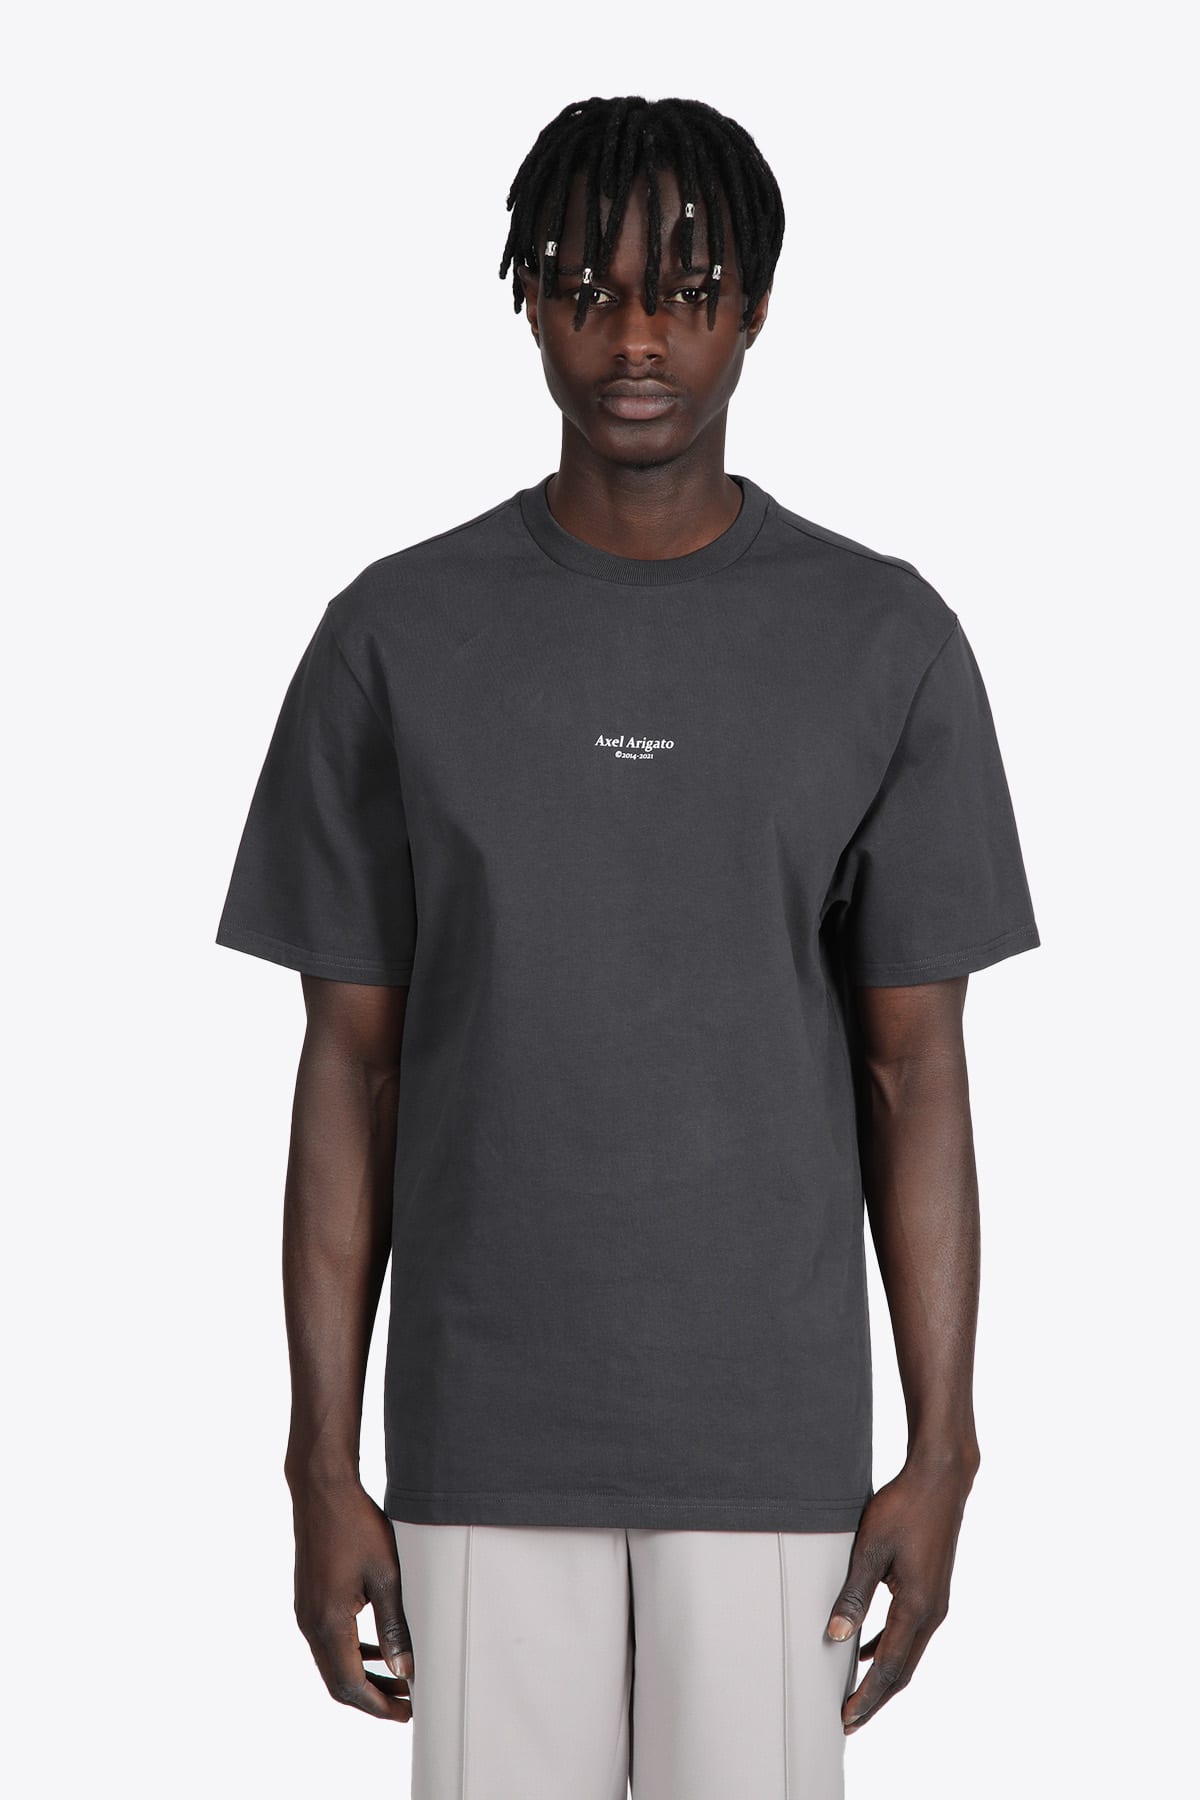 Axel Arigato Focus Logo T-shirt Faded black cotton t-shirt with smal logo print - Focus Logo T-shirt